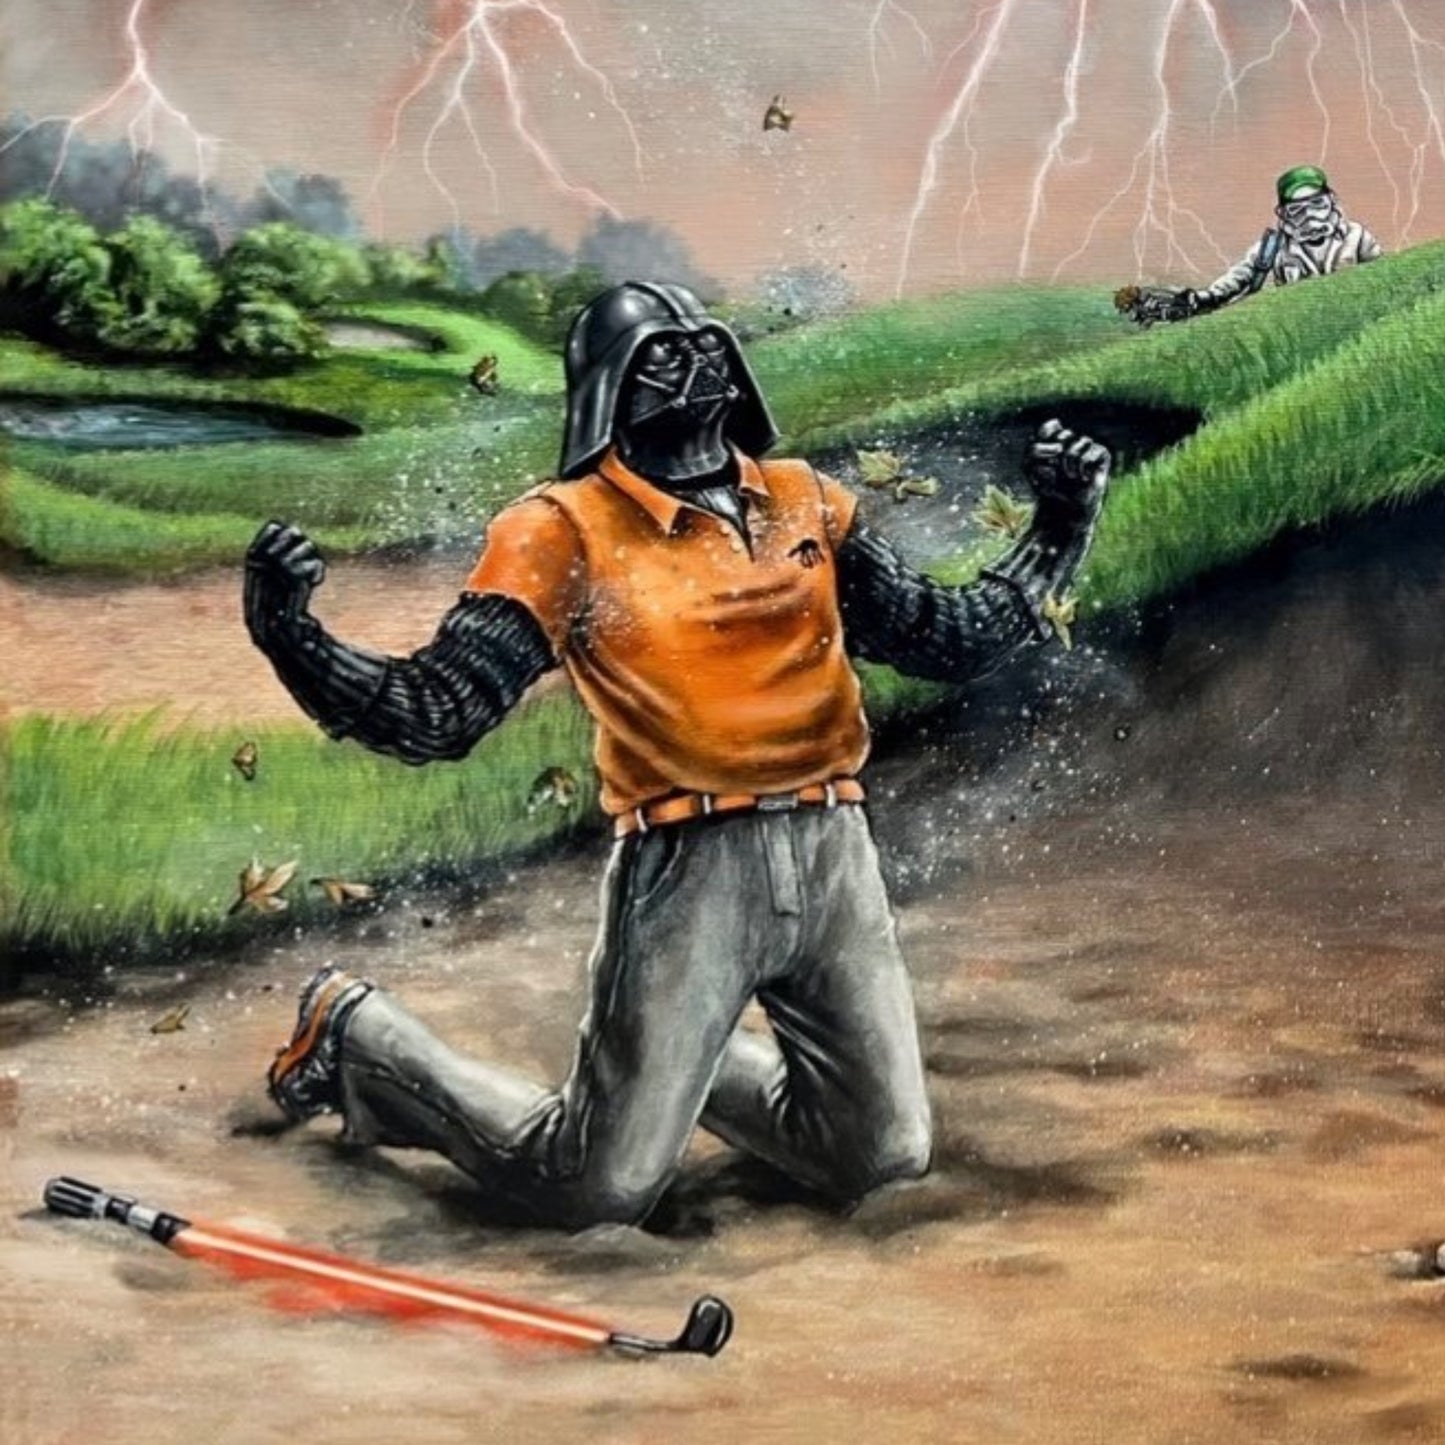 Darth Vader Sand Trap Star Wars Golf Parody Art Print